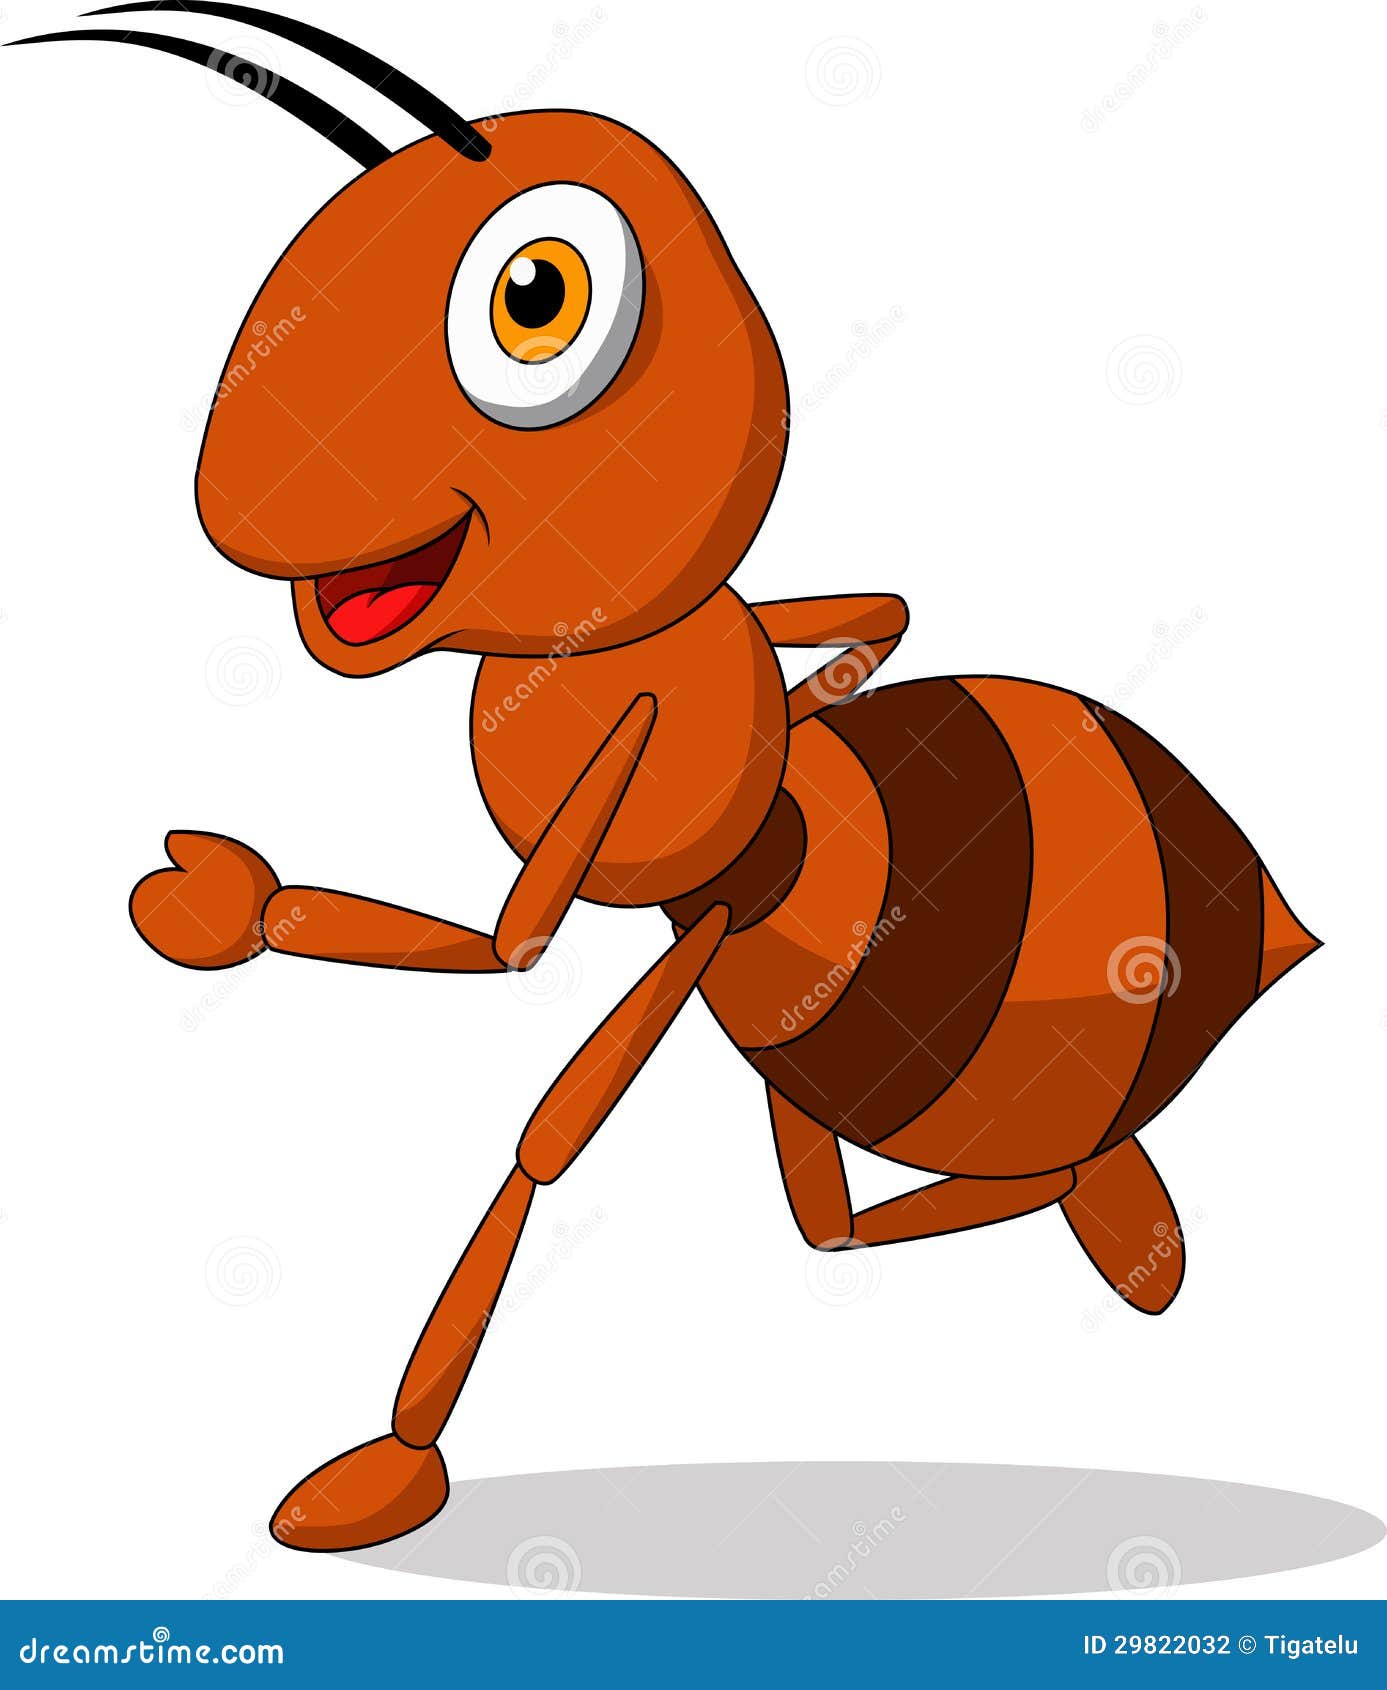 cartoon ant clipart - photo #41